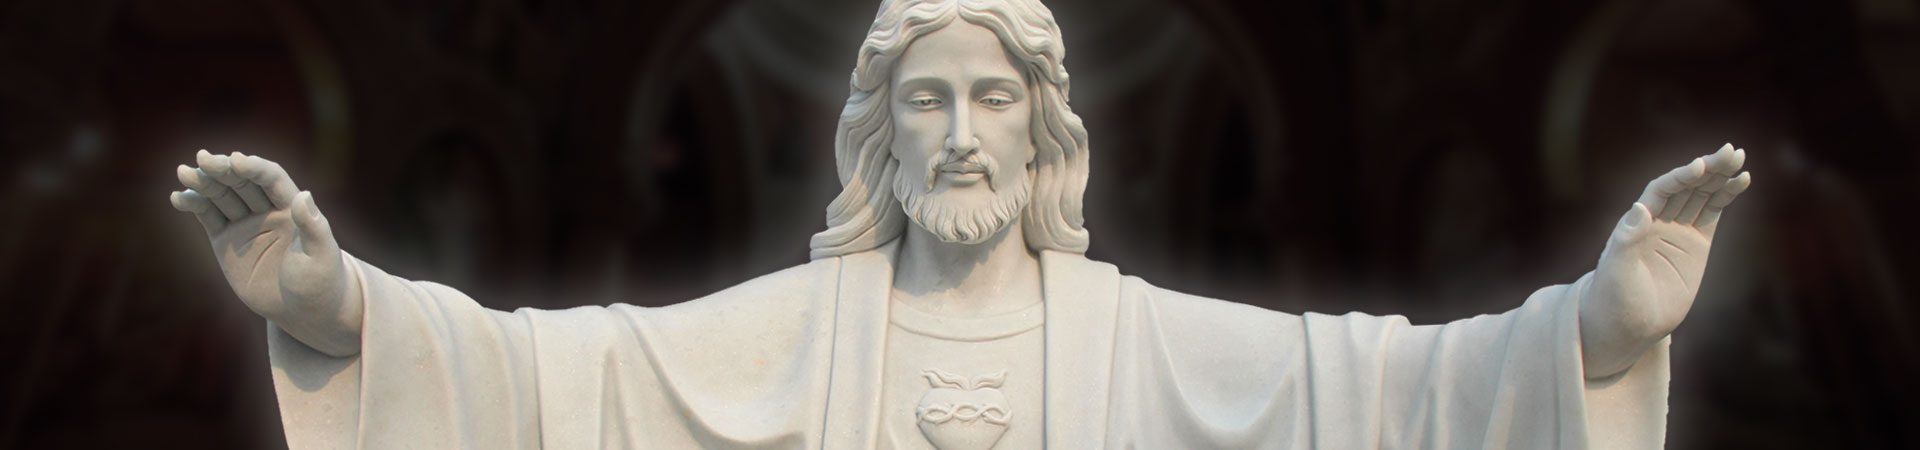 jesus christ statues